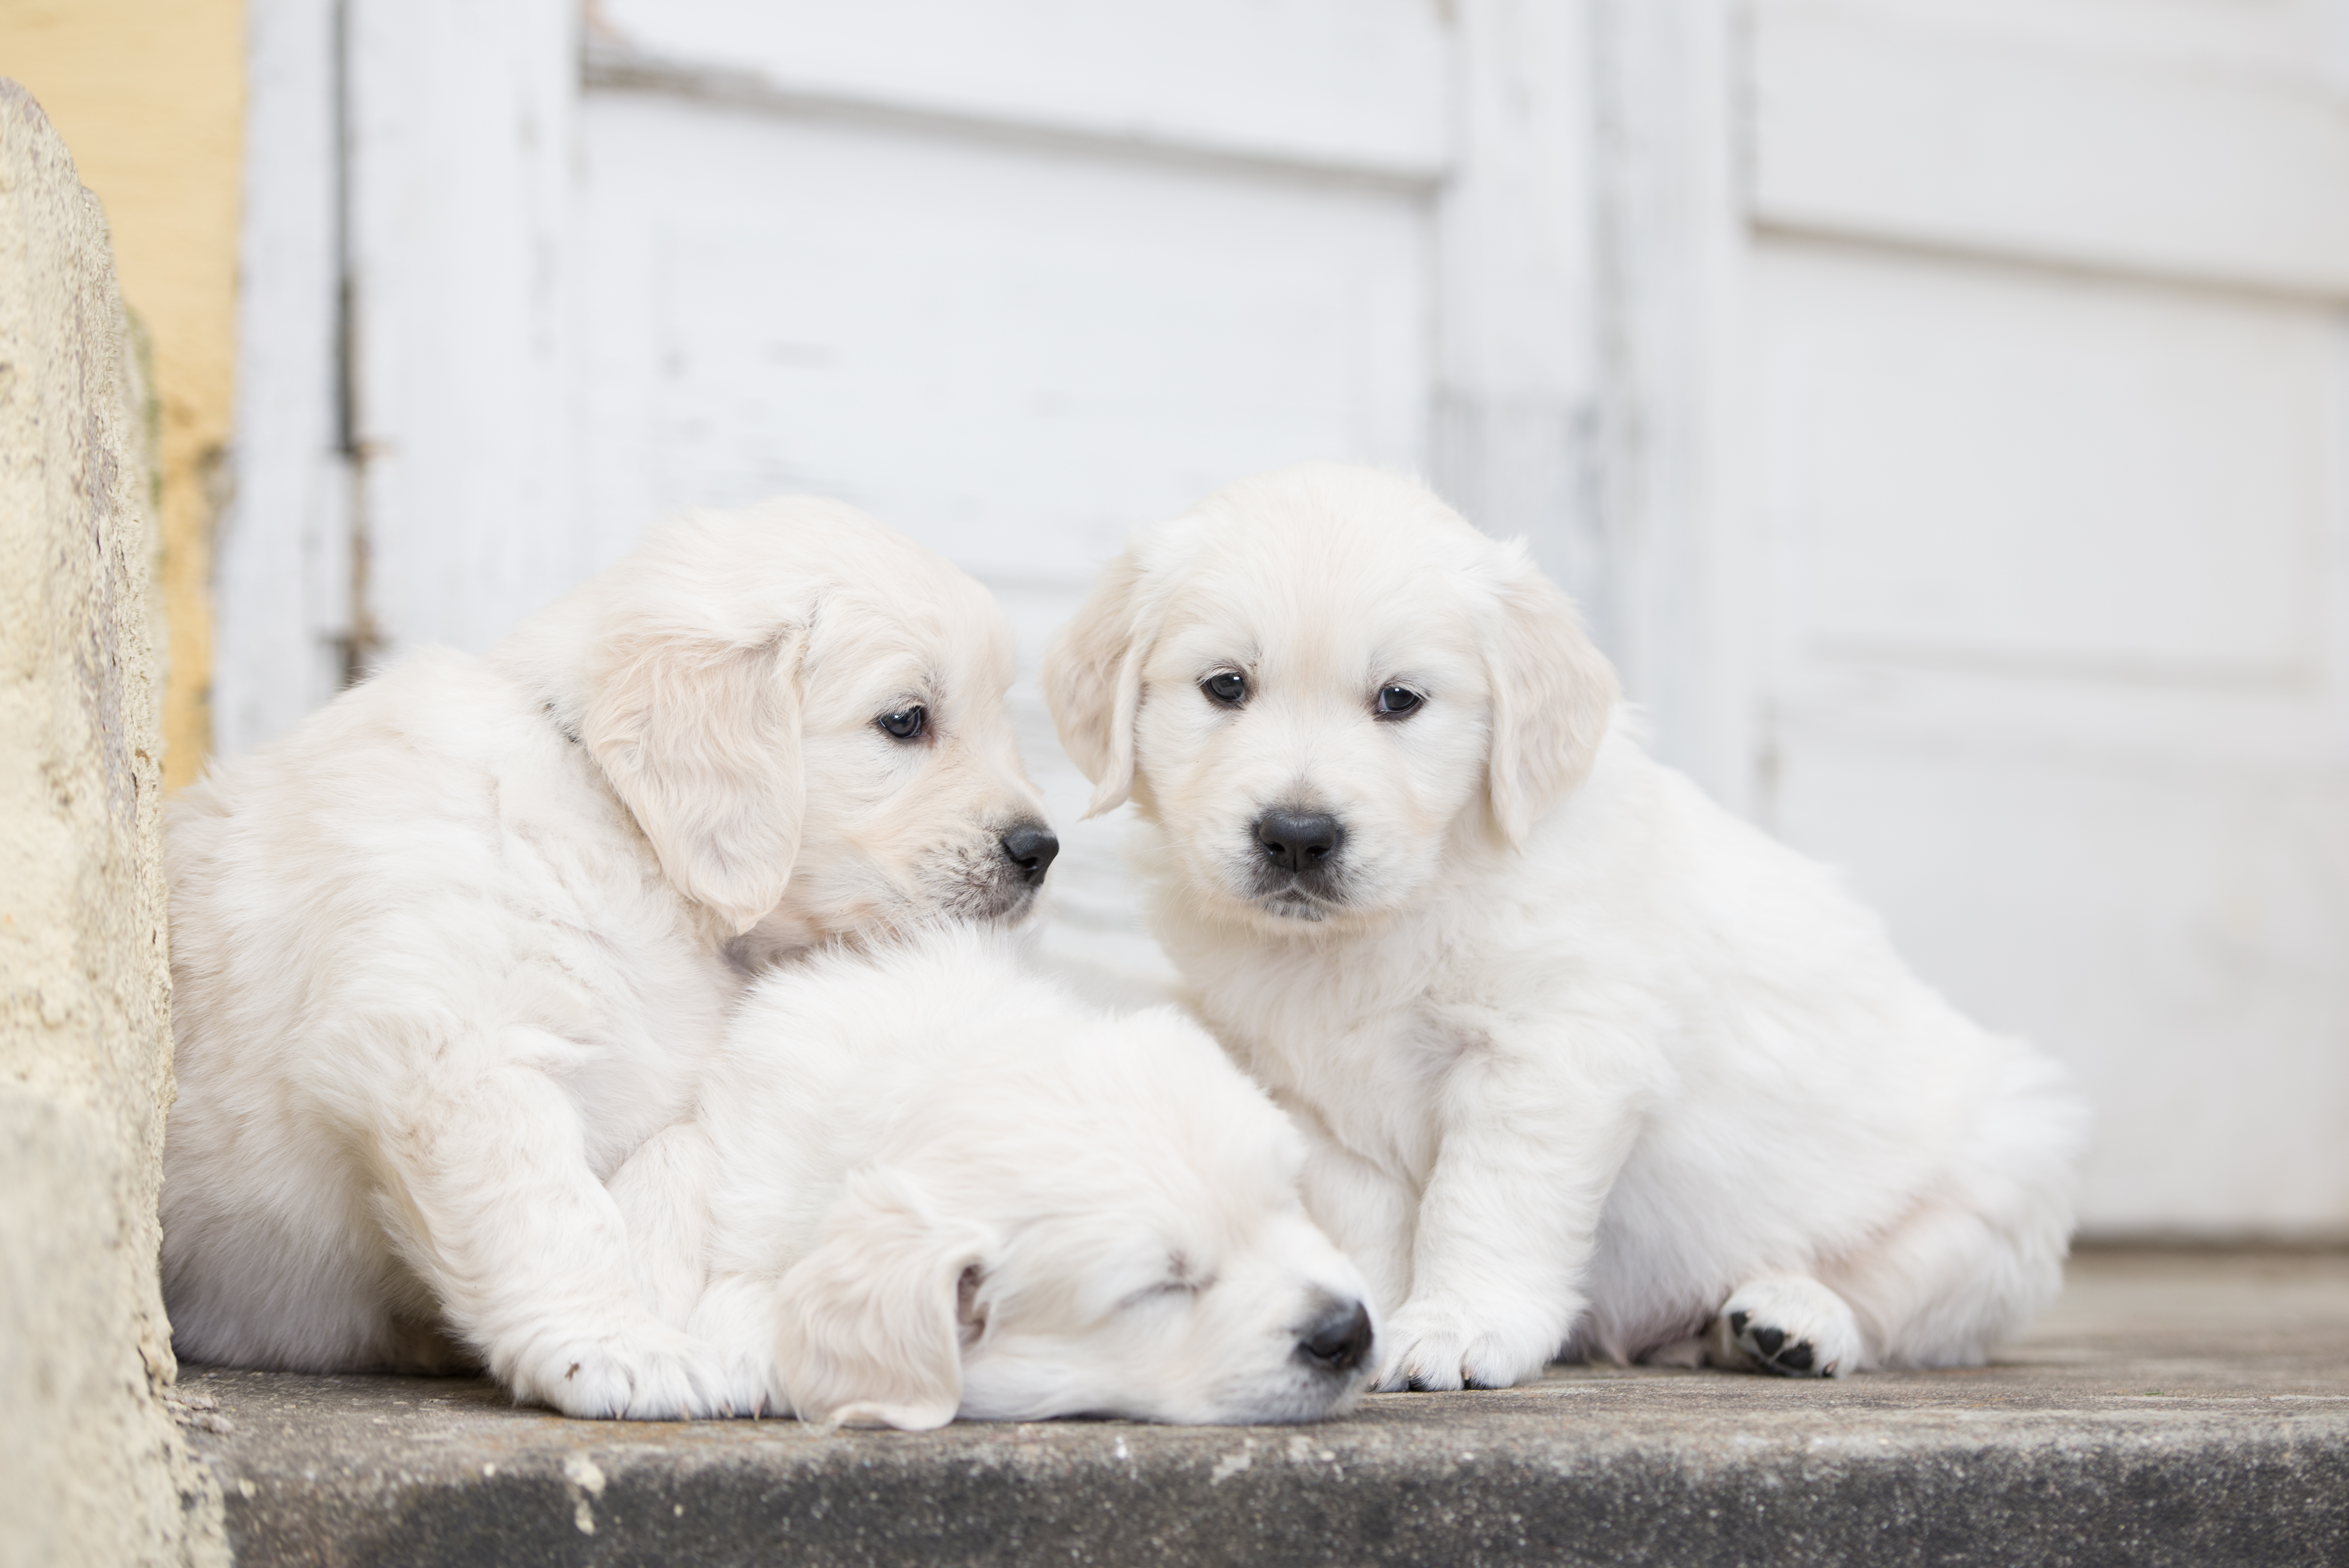 3 animals dogs. Голден ретривер щенки белые. Золотистый ретривер белый. Золотистый ретривер белый щенок. Голден ретривер кутята.